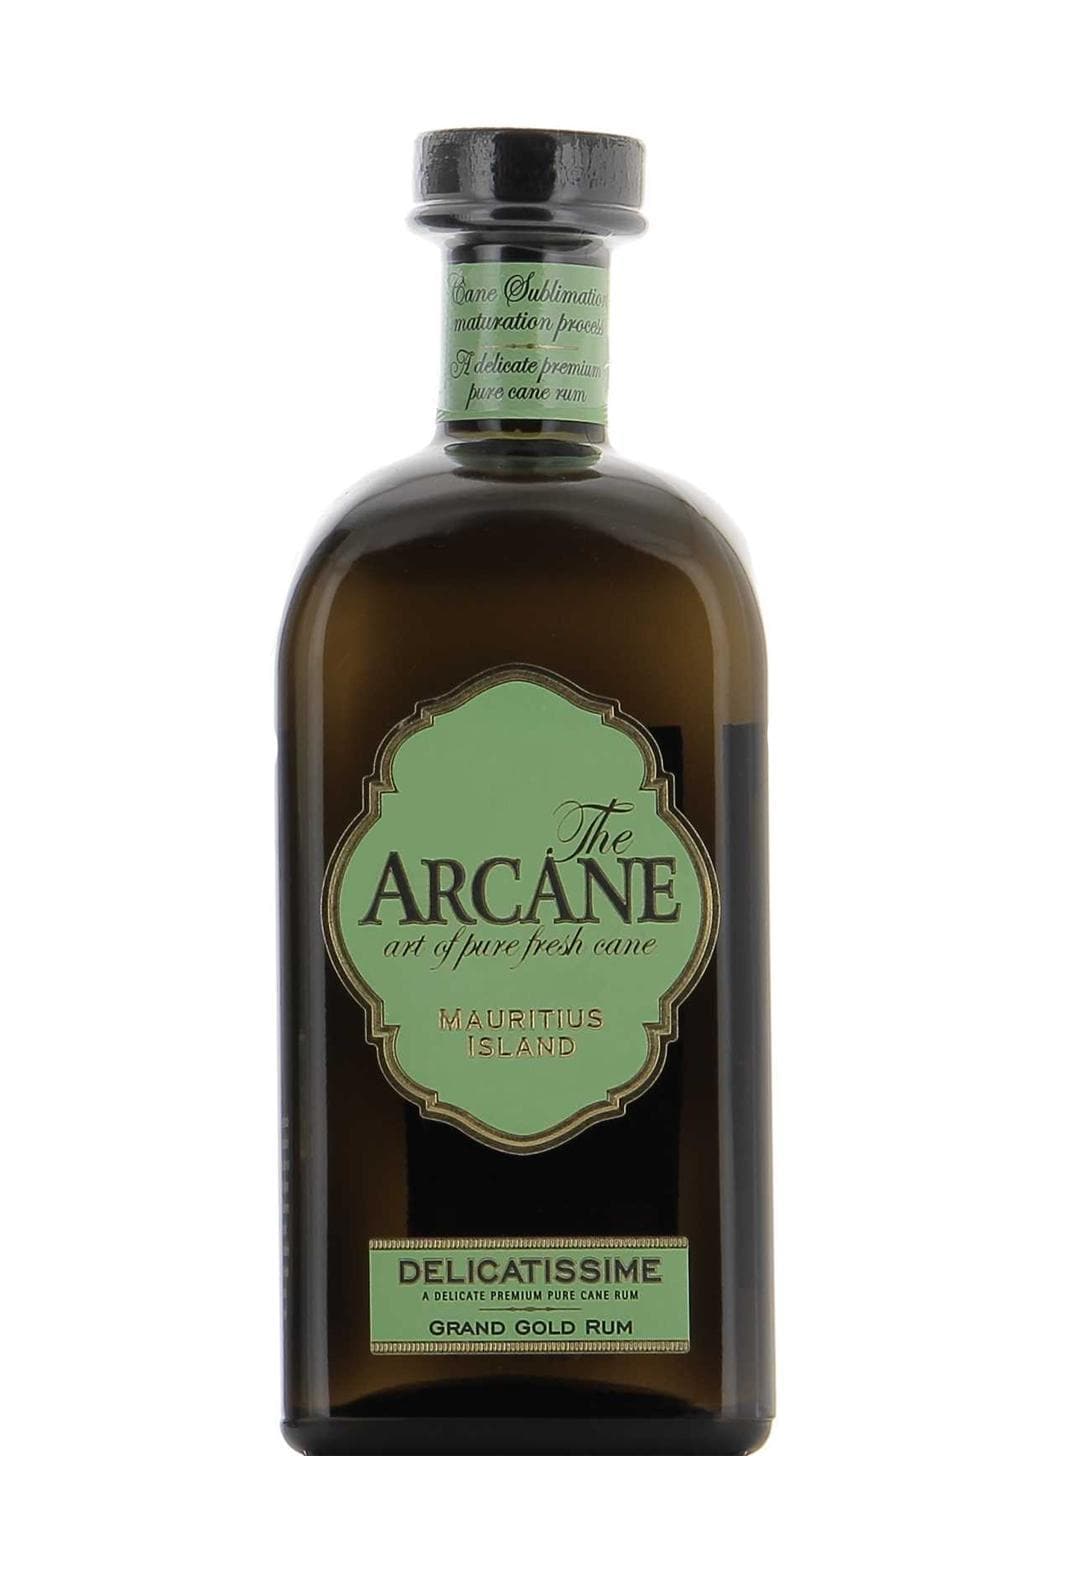 Arcane Gold Rum 'Delicatissime' 1.5 years 41% 700ml | Rum | Shop online at Spirits of France